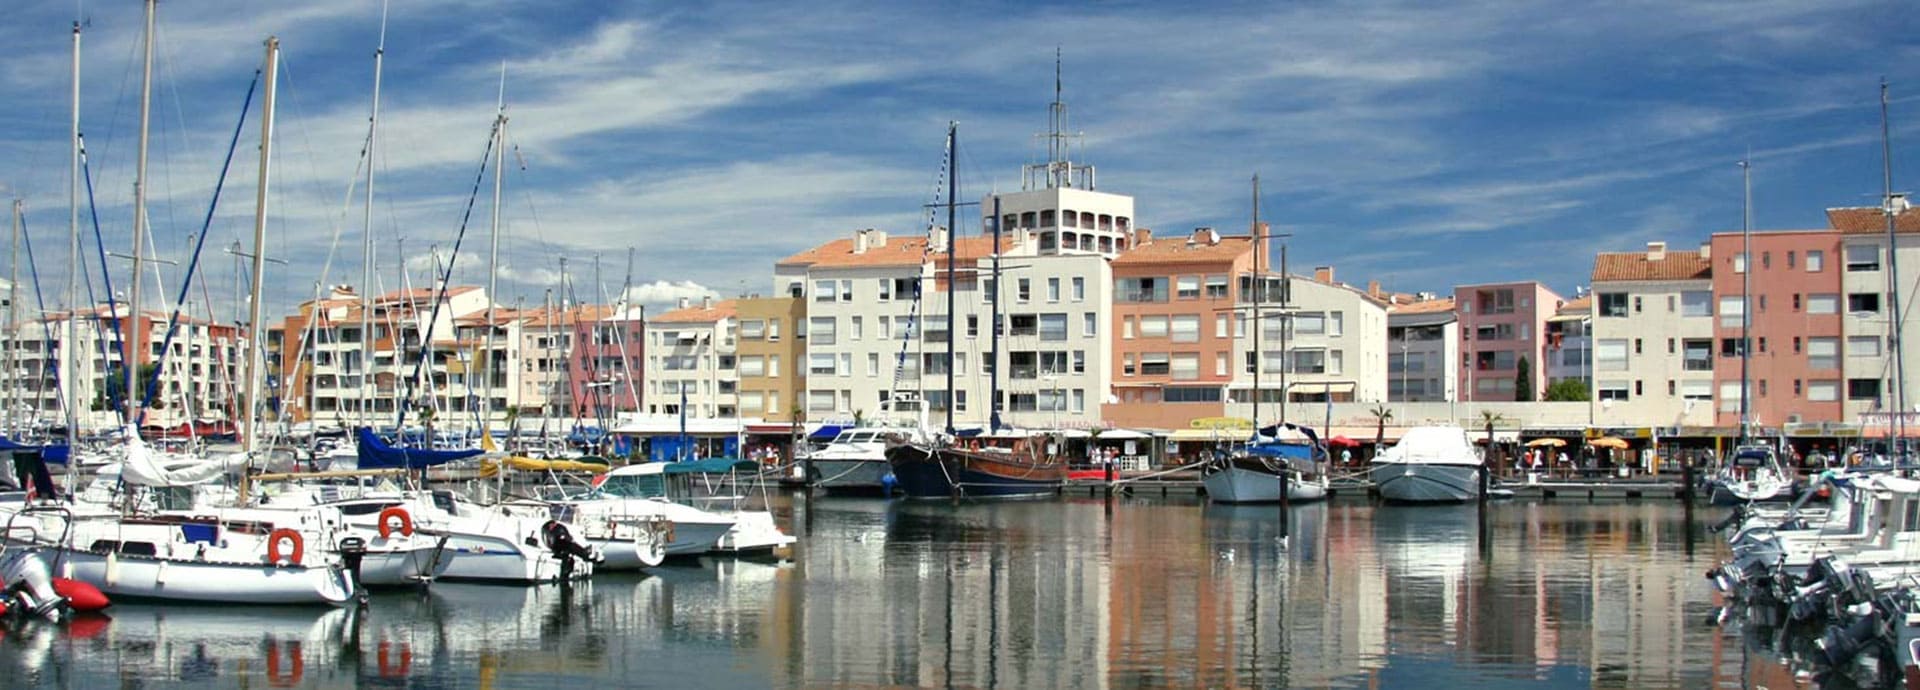 The port of Cap d’Agde seaside resort in the Hérault Department